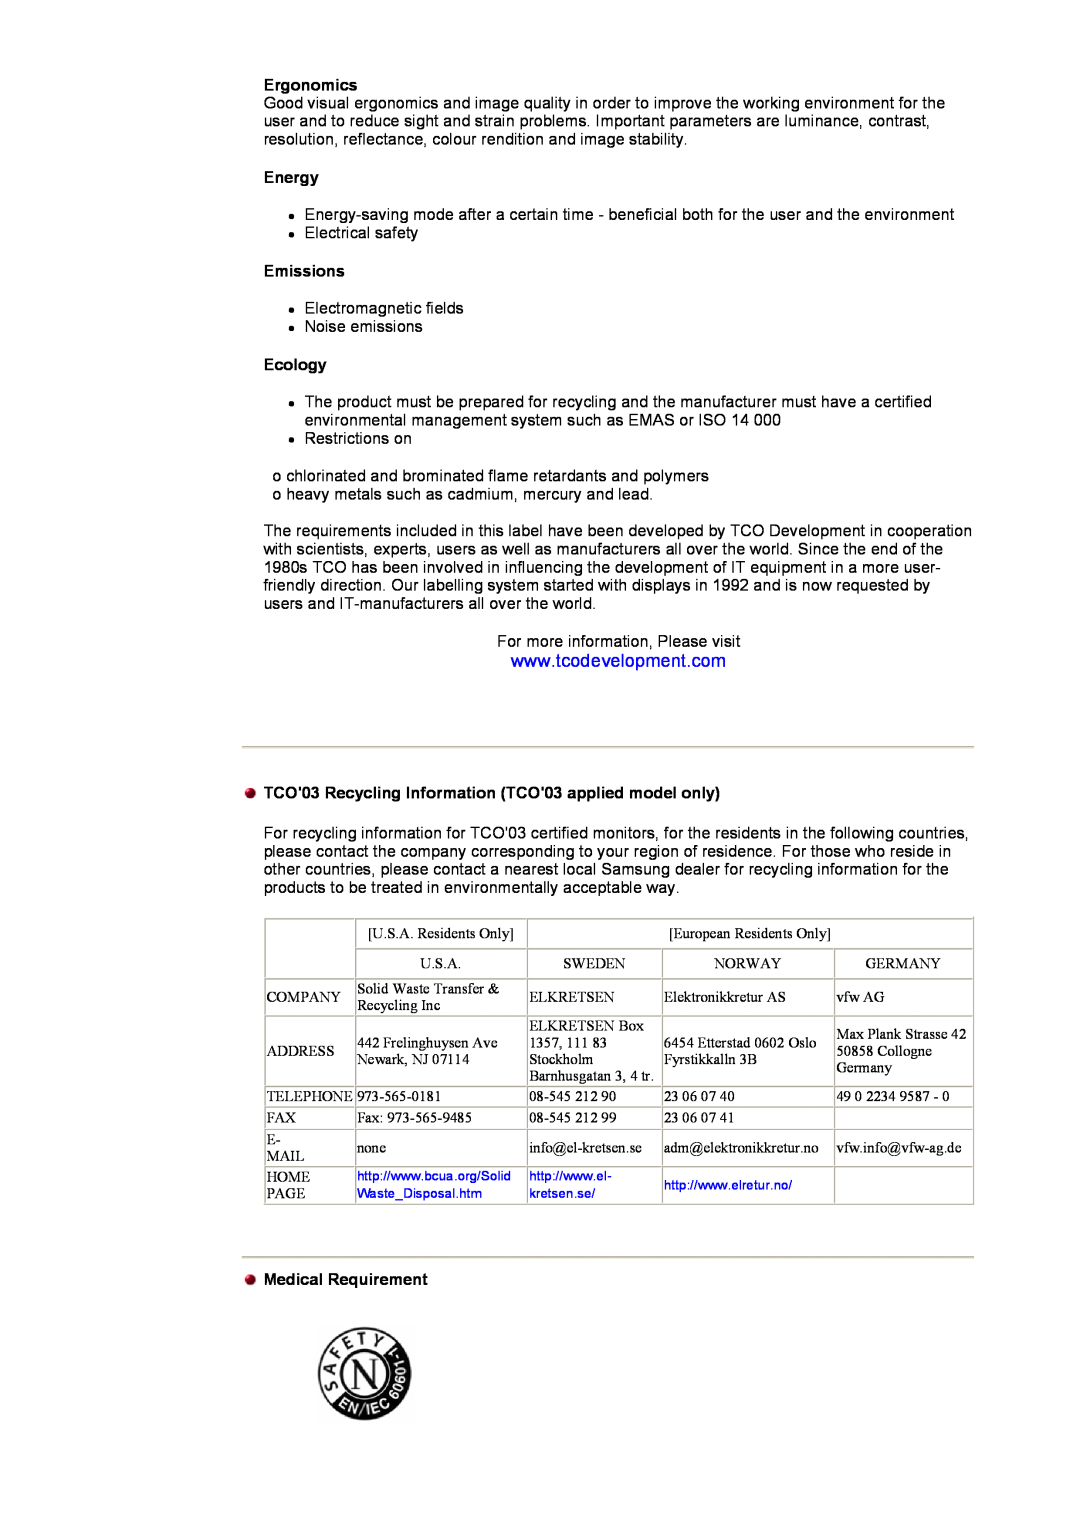 Samsung 153S manual Ergonomics, Energy, Emissions, Ecology, Medical Requirement 